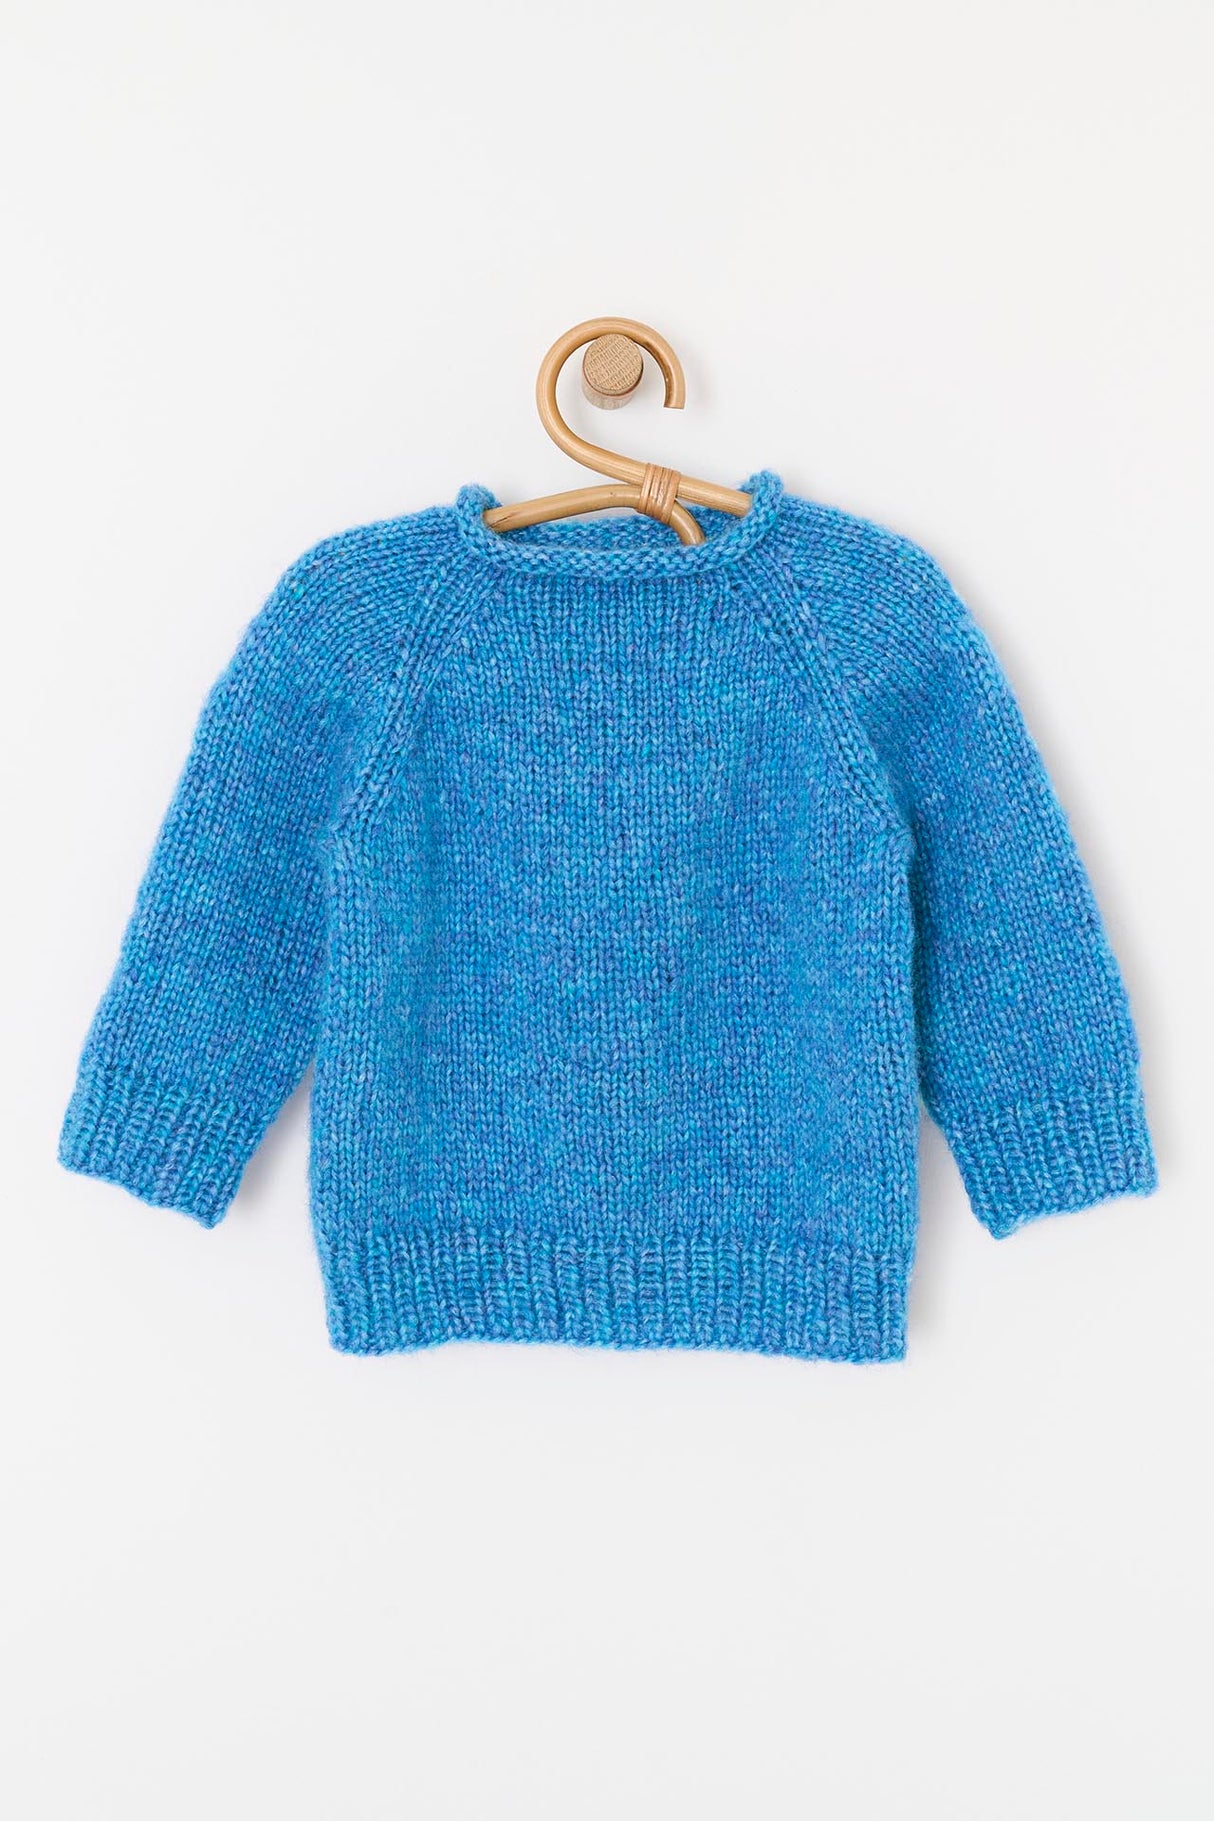 Raglansweater junior - Breezy Style